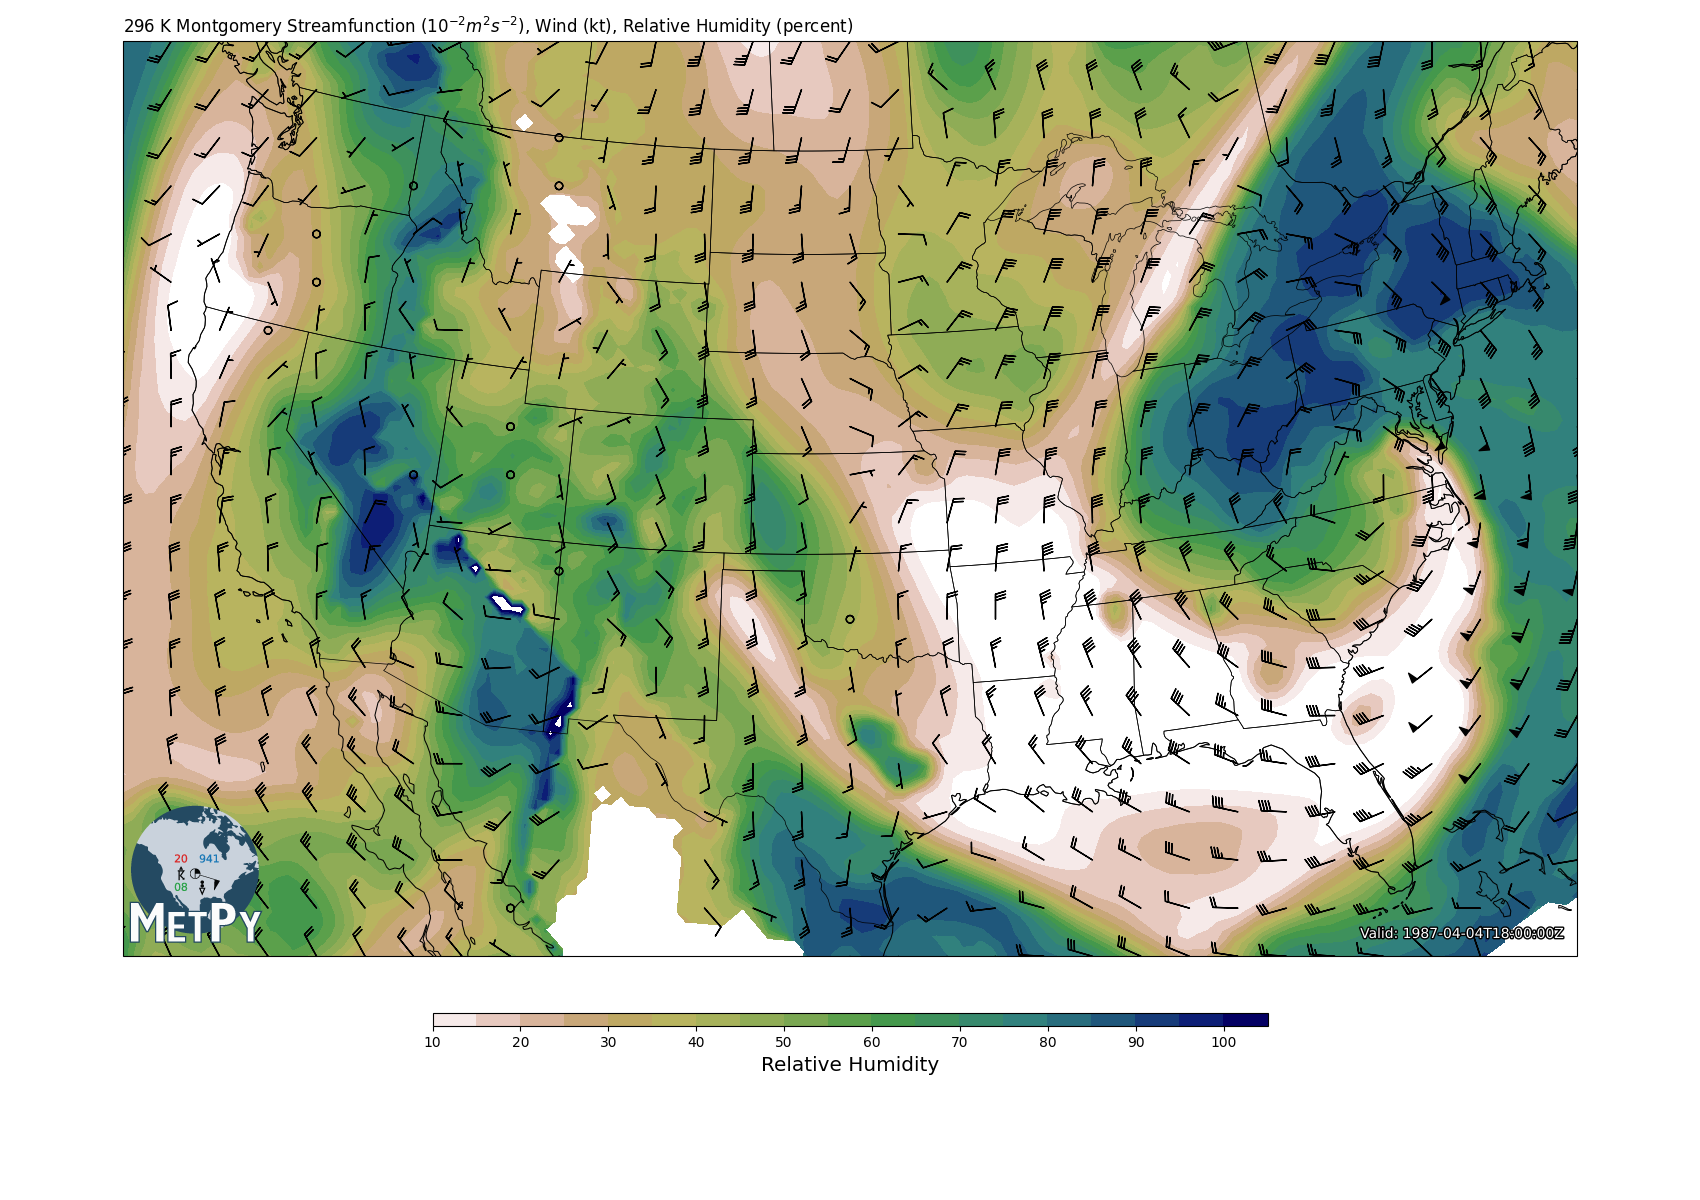 296 K Montgomery Streamfunction ($10^{-2} m^2 s^{-2}$), Wind (kt), Relative Humidity (percent)